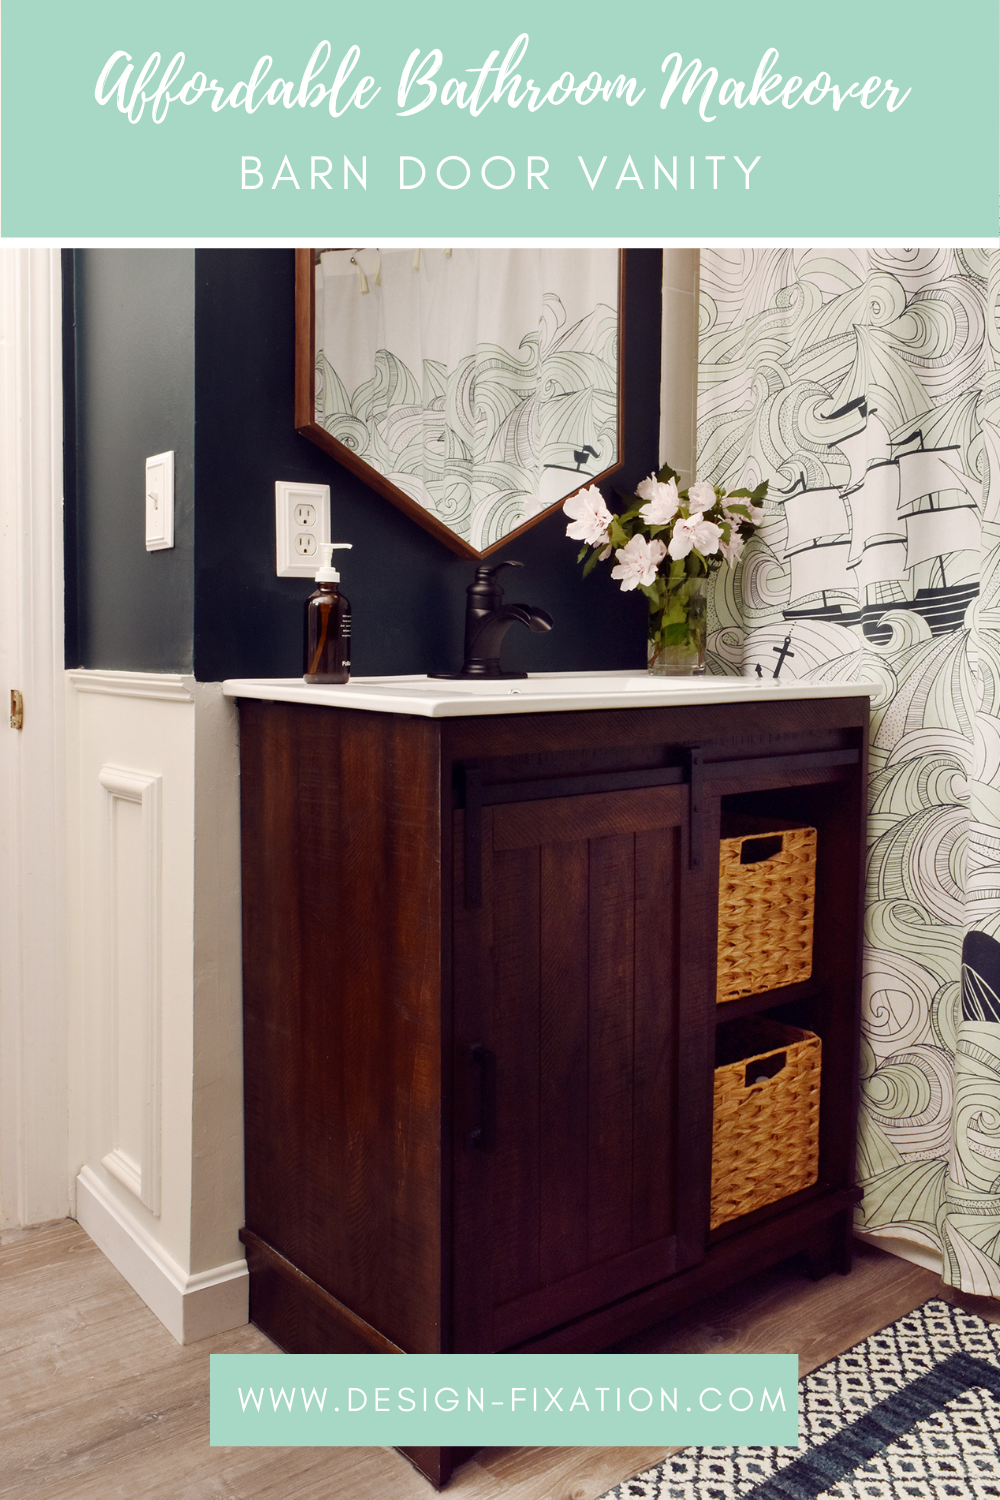 Affordable Bathroom Makeover... Barn Door Vanity For The Win! /// By Design Fixation #bathroom #makeover #refresh #vanity #barn_door